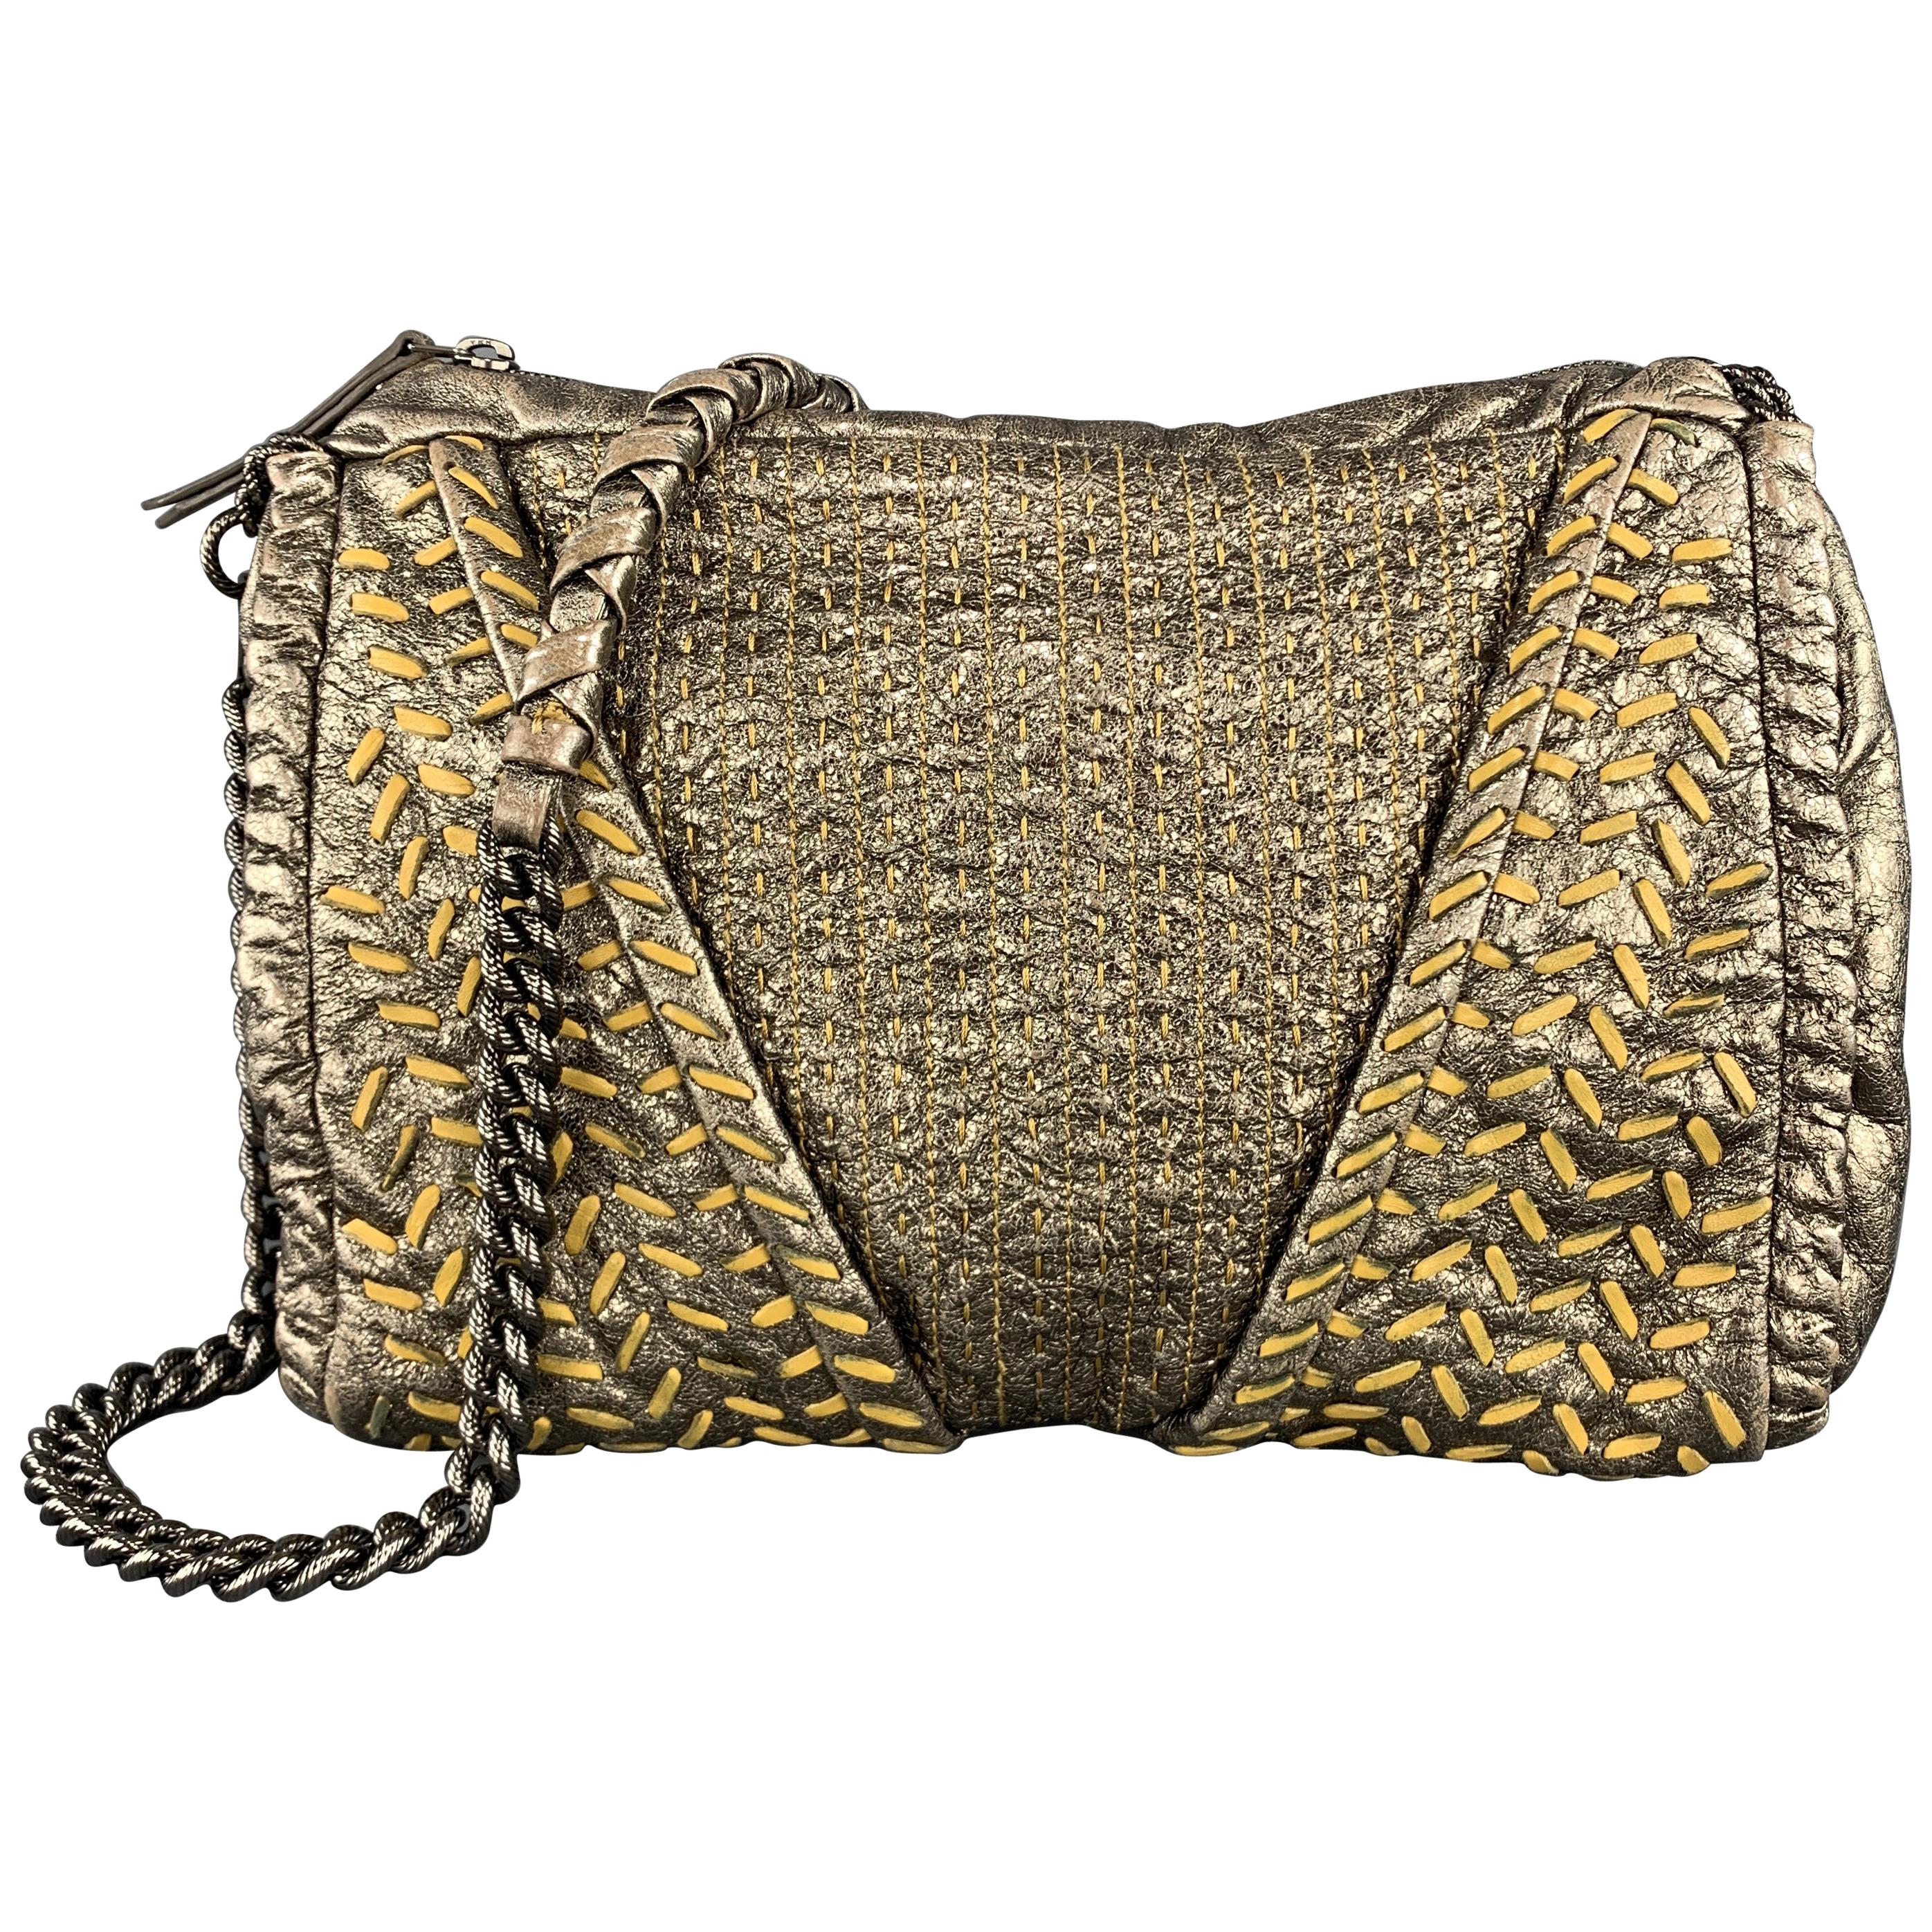 ELIE TAHARI Metallic Quilted Leather Woven Chain Strap Handbag